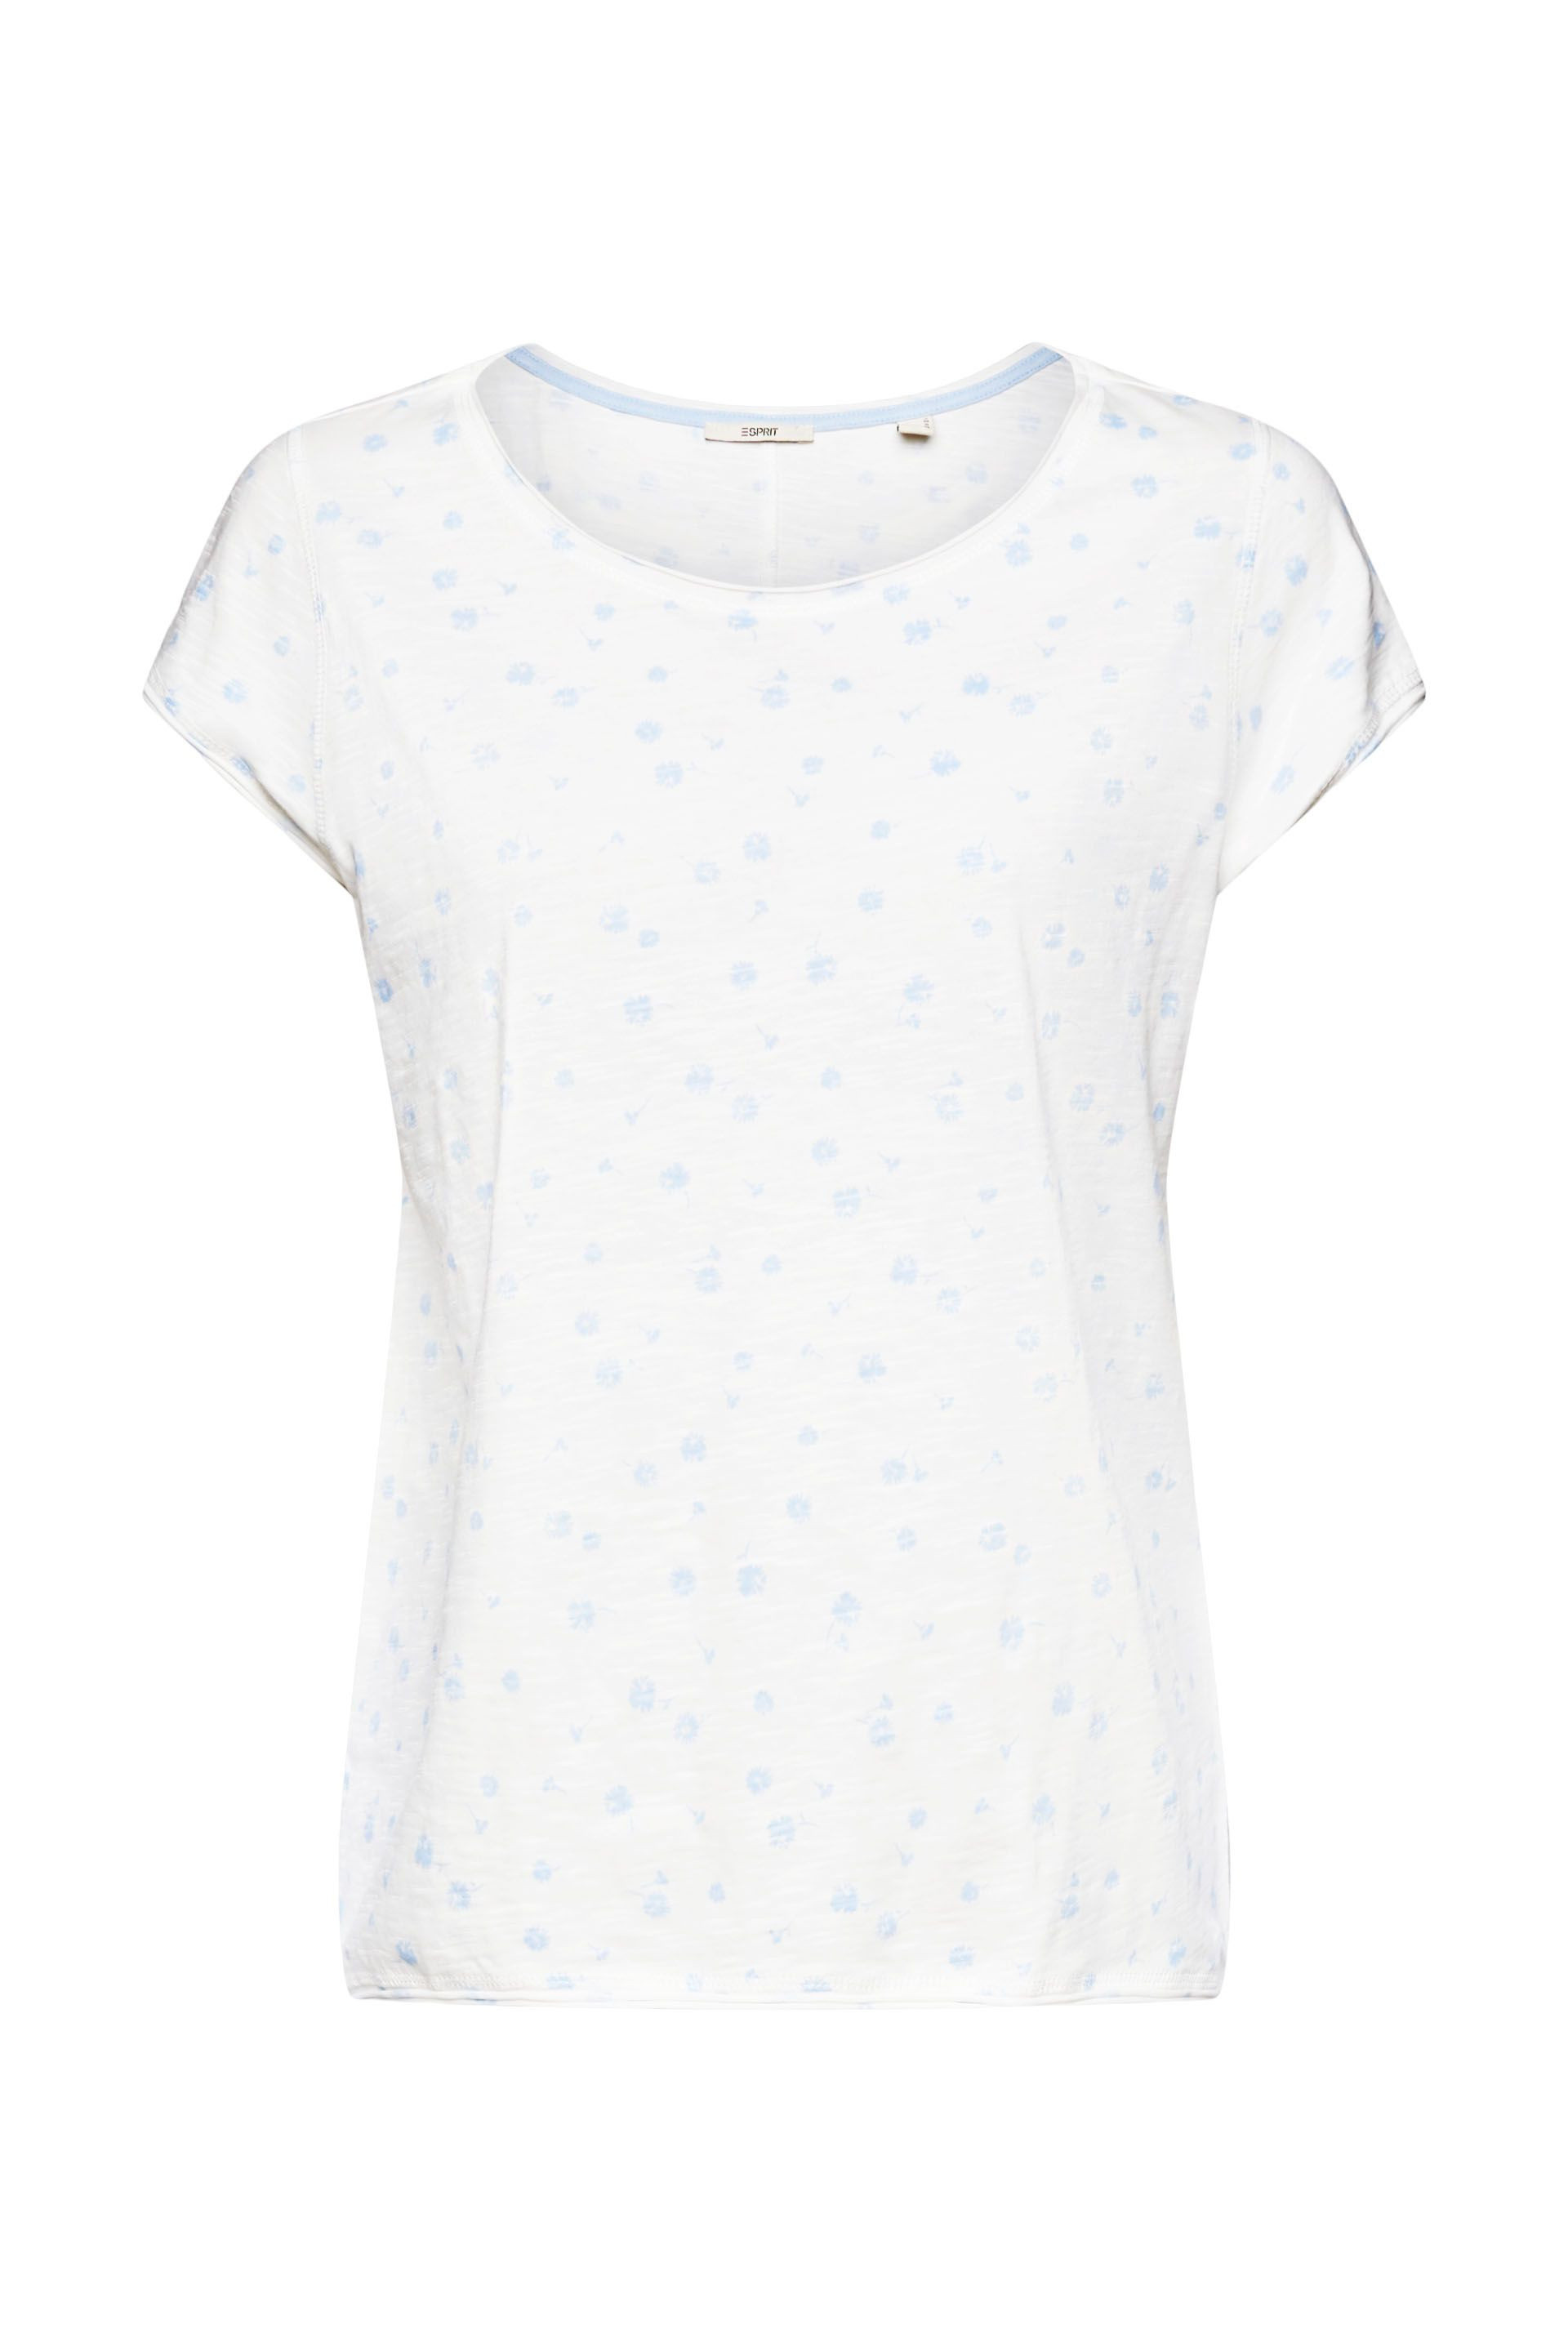 Esprit - T-shirt con stampa, Bianco, large image number 0